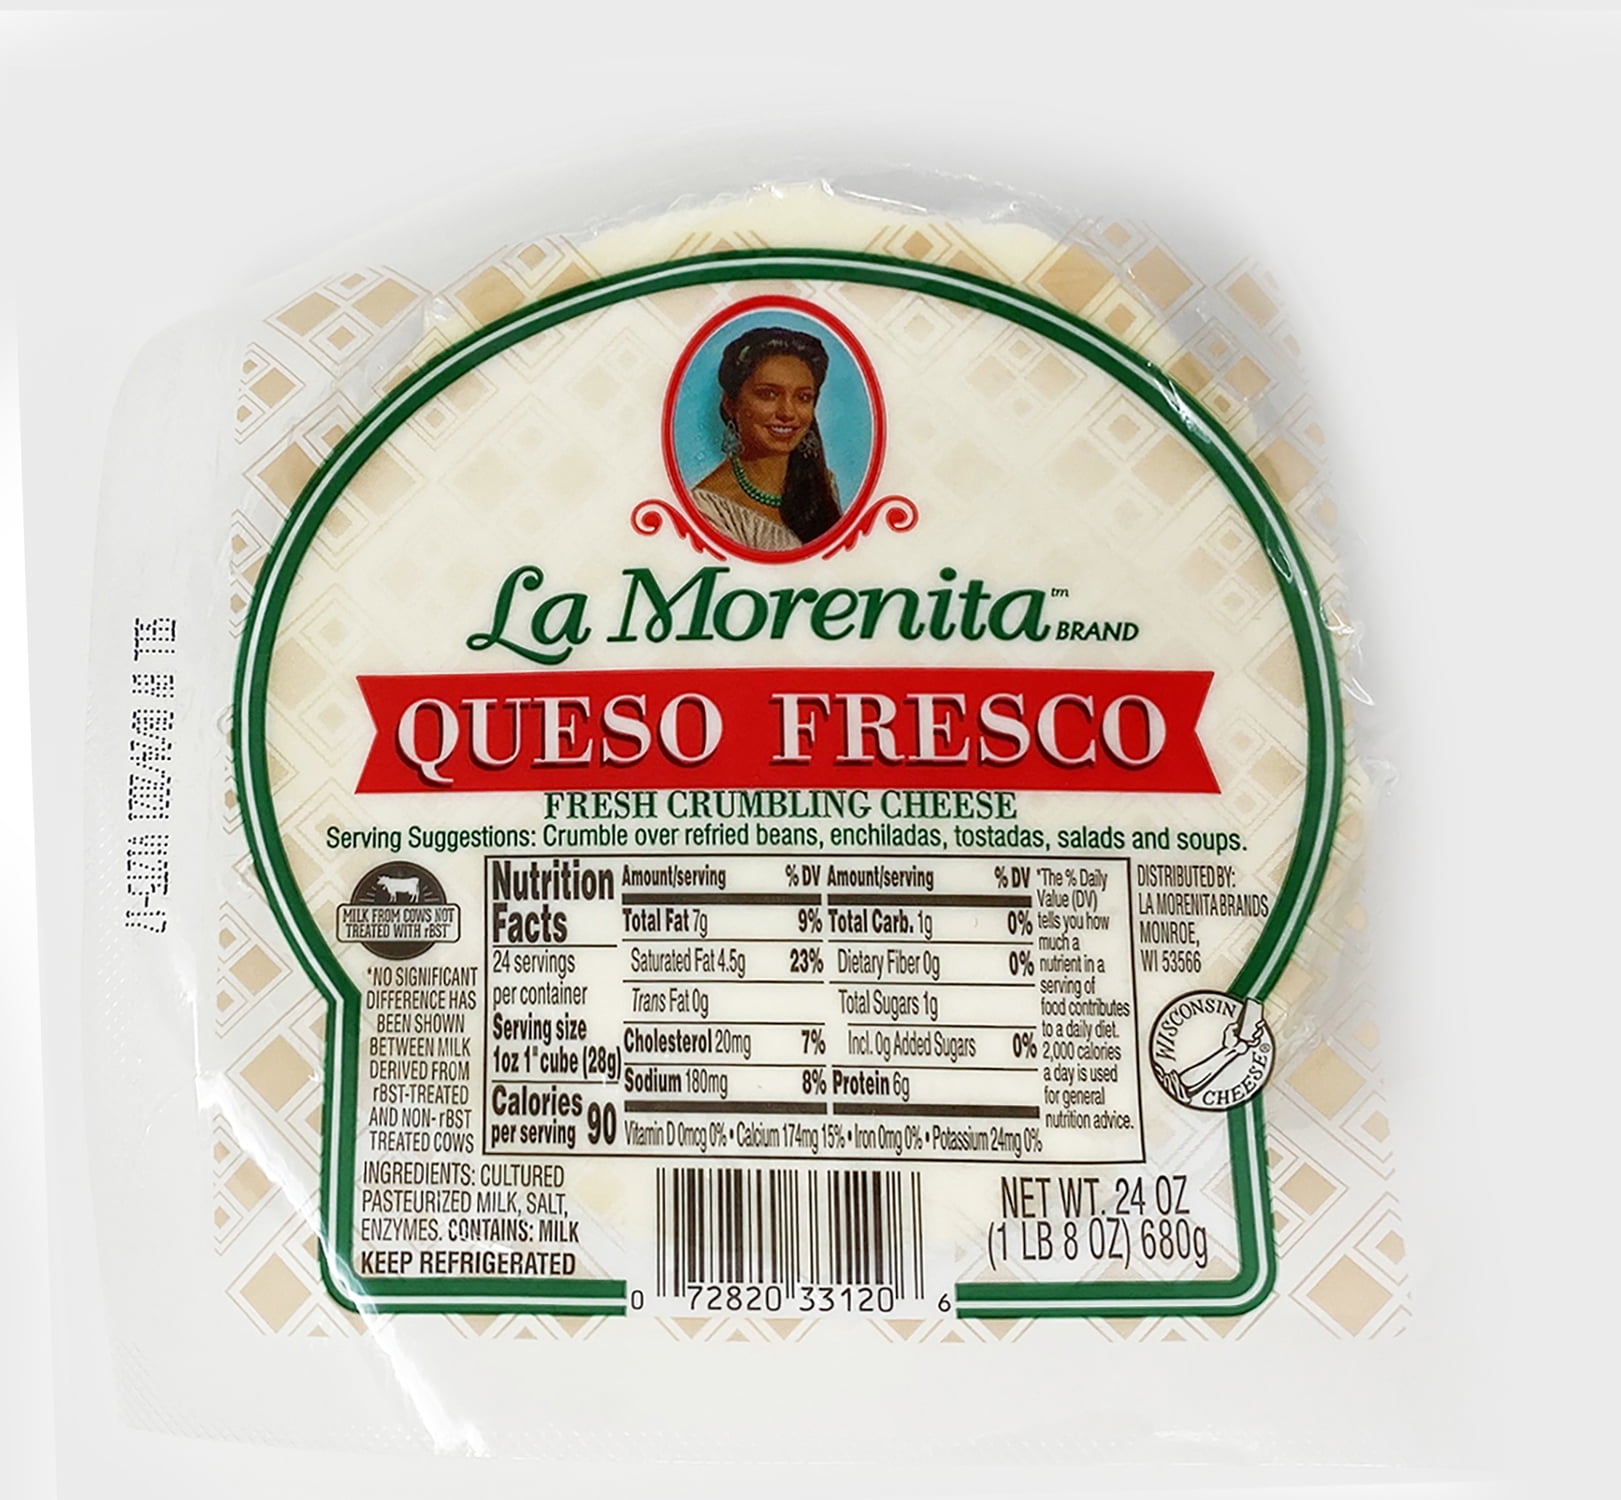 Queso Fresco - Soft Crumbling Cheese